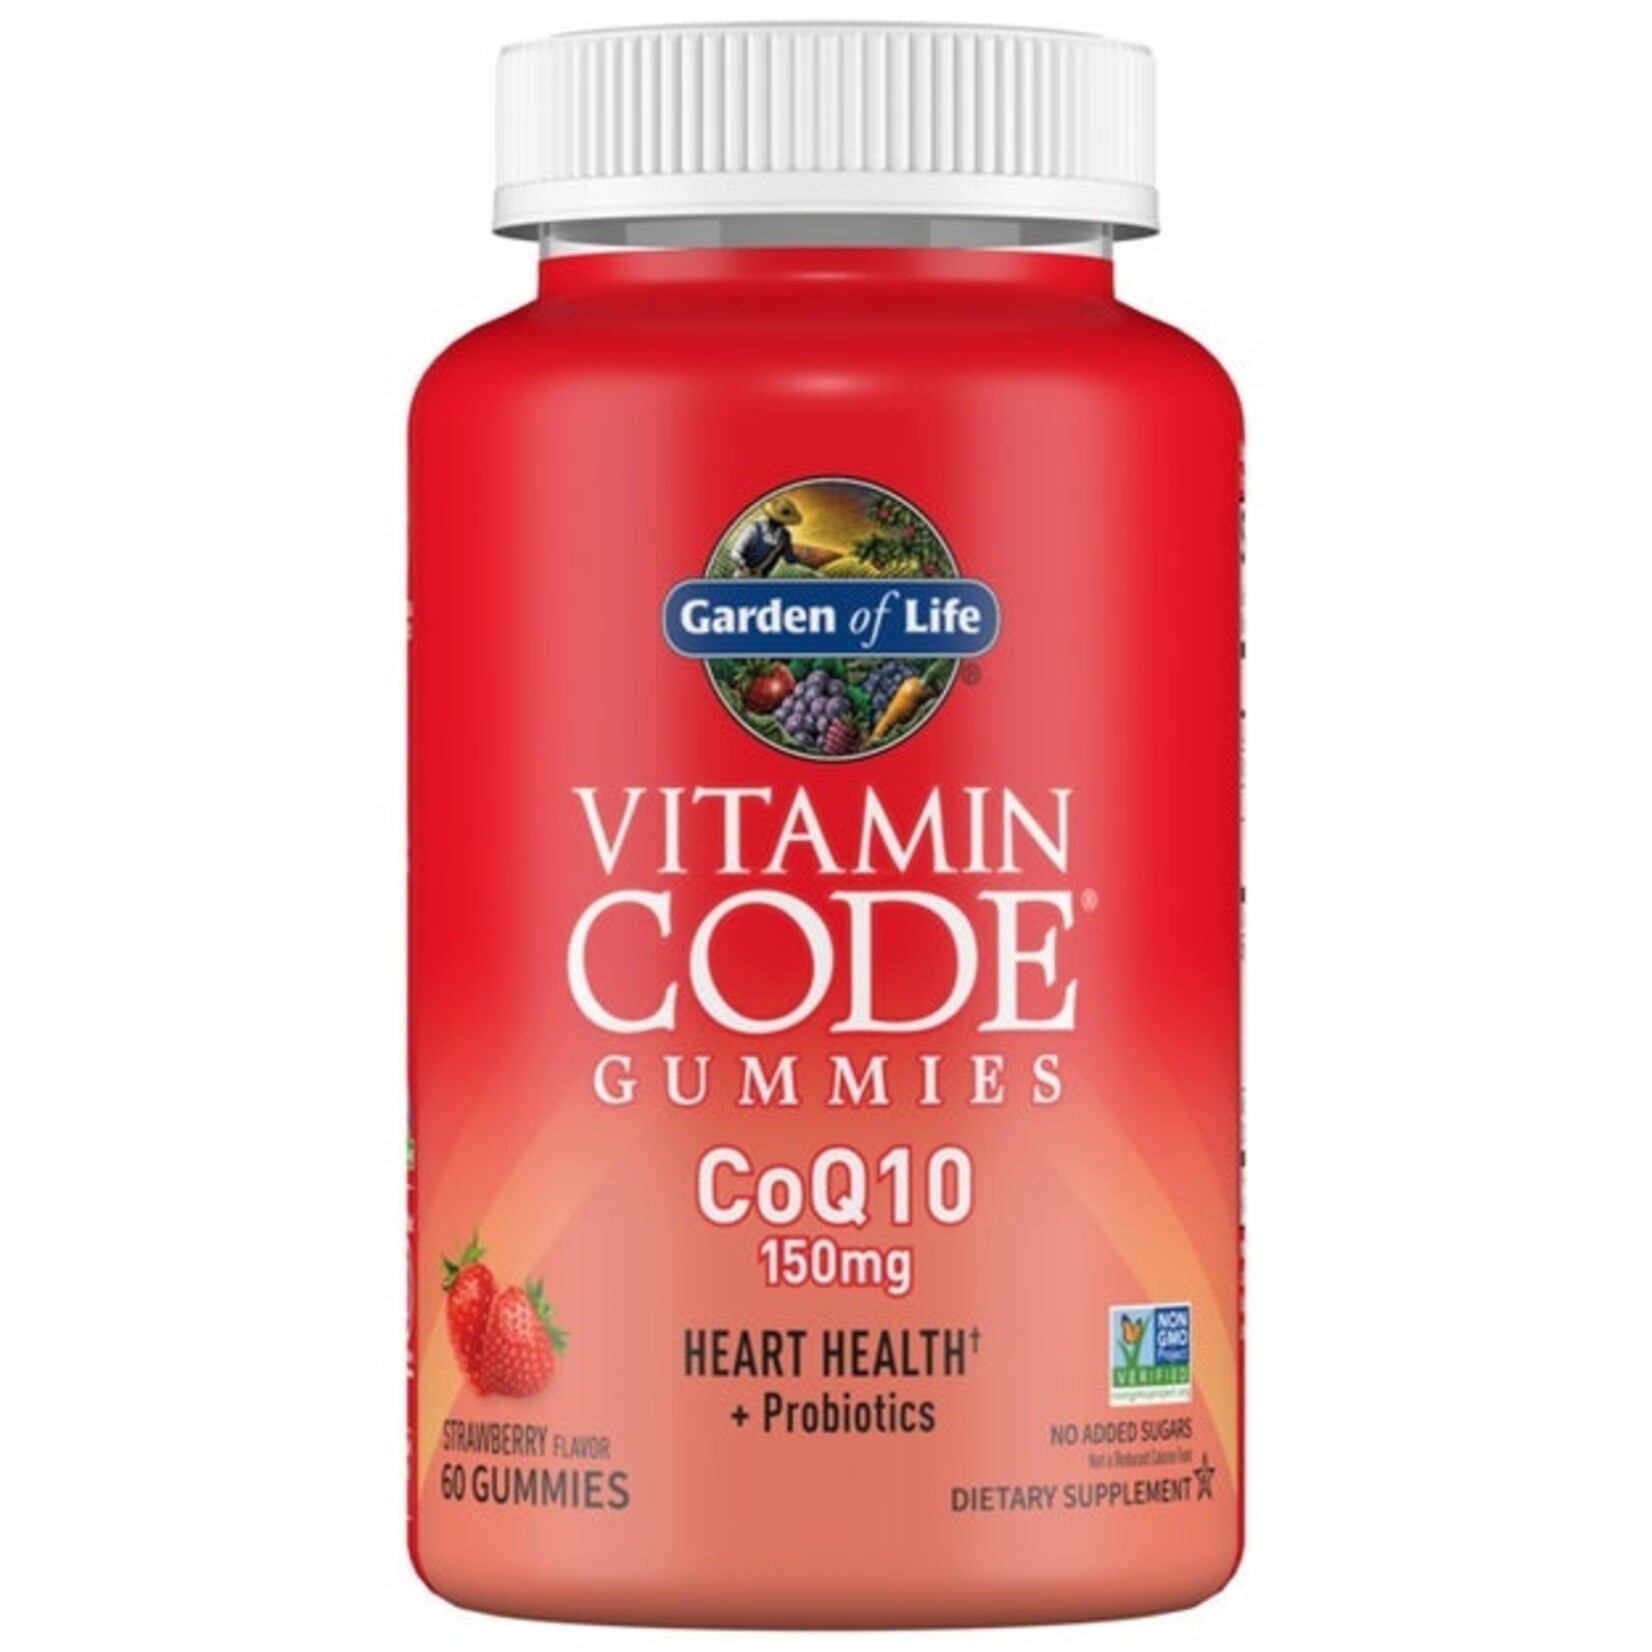 Garden of Life Garden of Life - Vitamin Code CoQ10 150mg - 60 Gummies